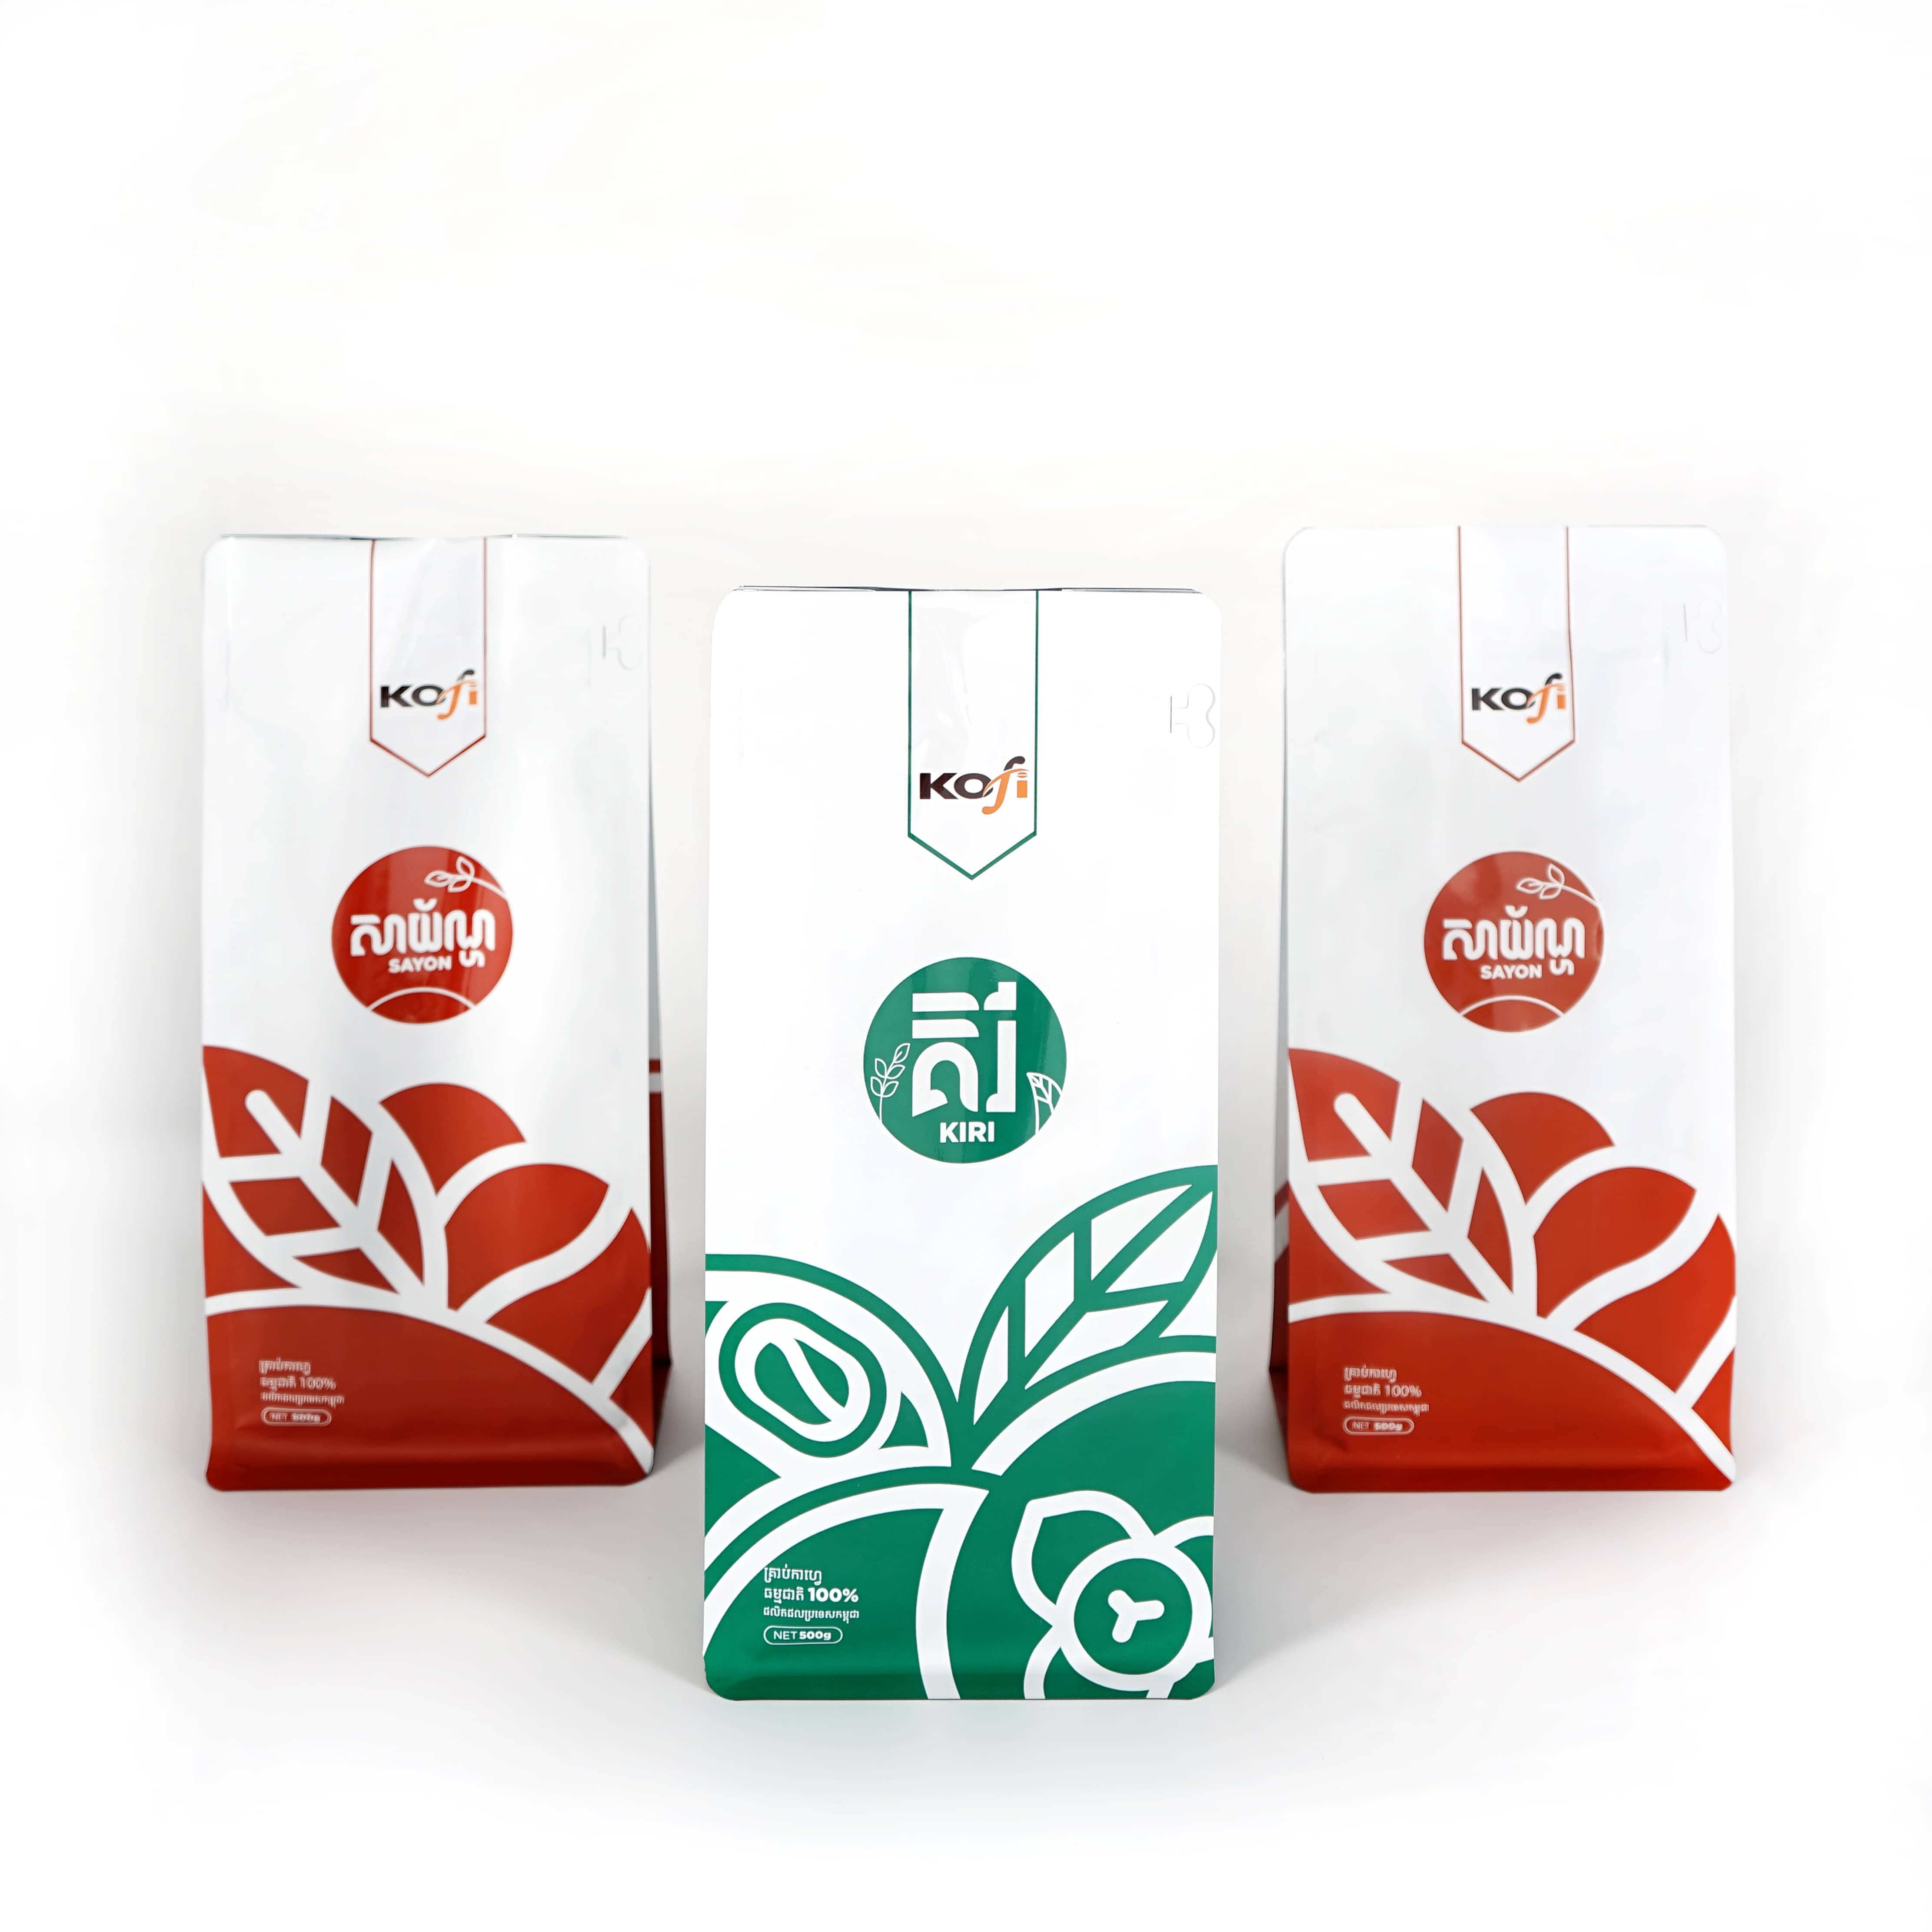 Hliníkové fóliové sáčky Balení Čaj Káva Plastové obalové sáčky Výroba